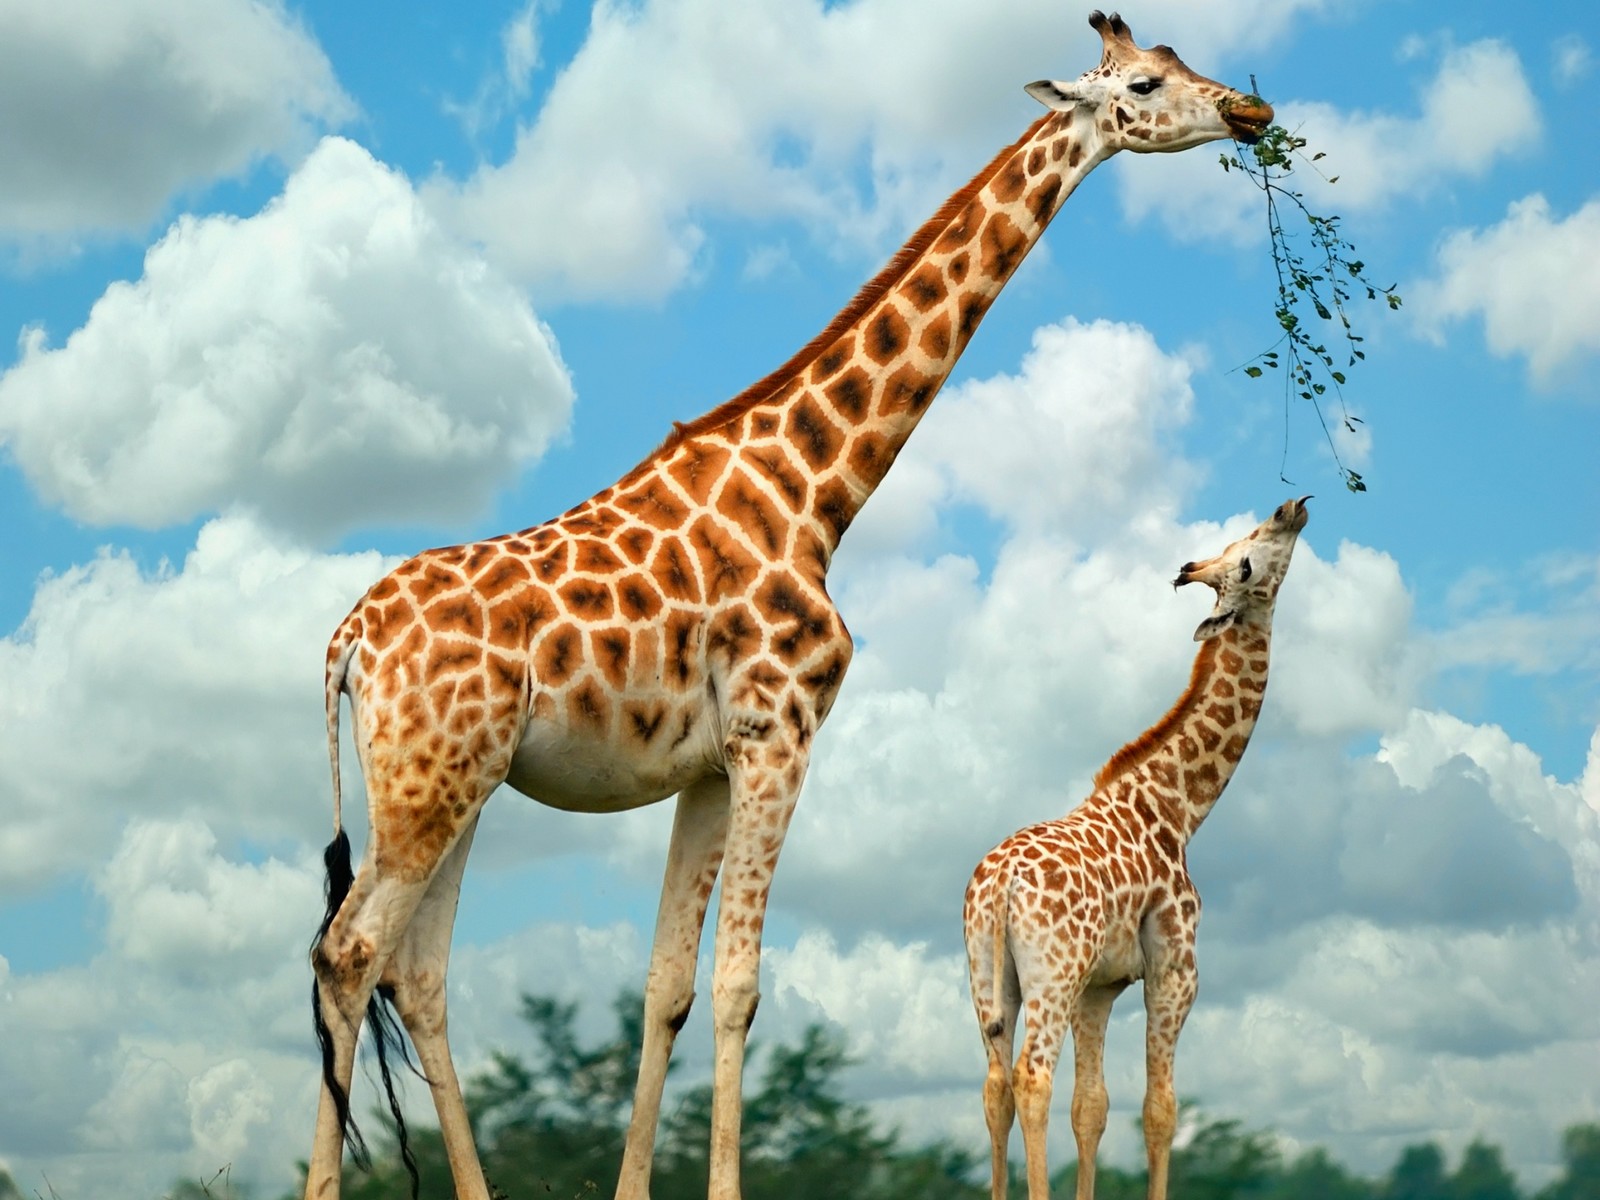 Photo of a giraffe